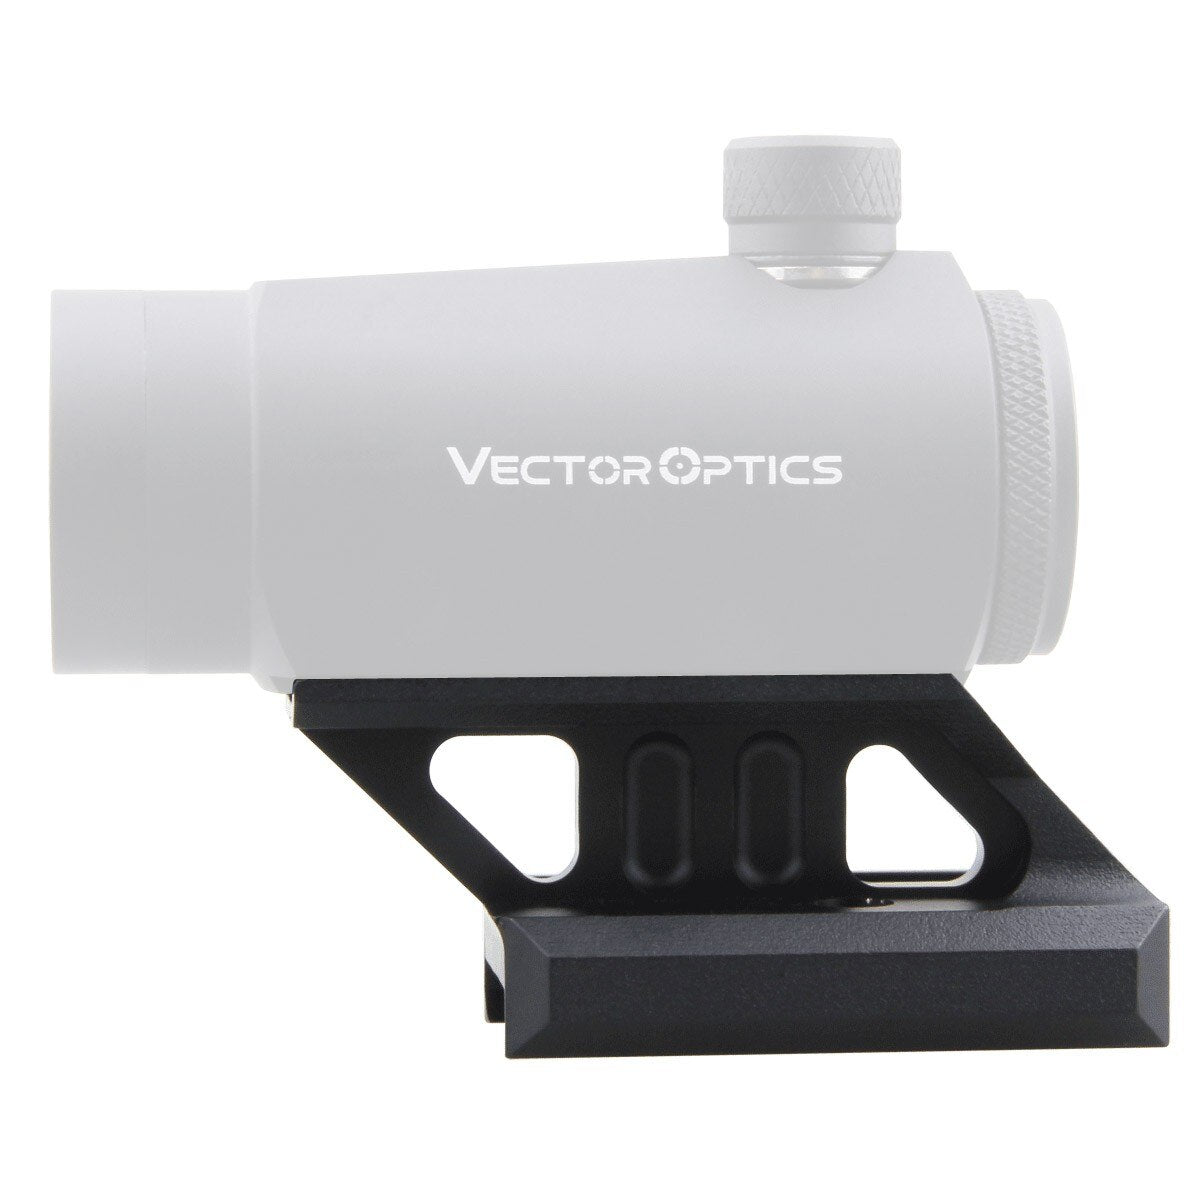 Vector Optics 0.83" Profile Cantilever Picatinny Riser Mount